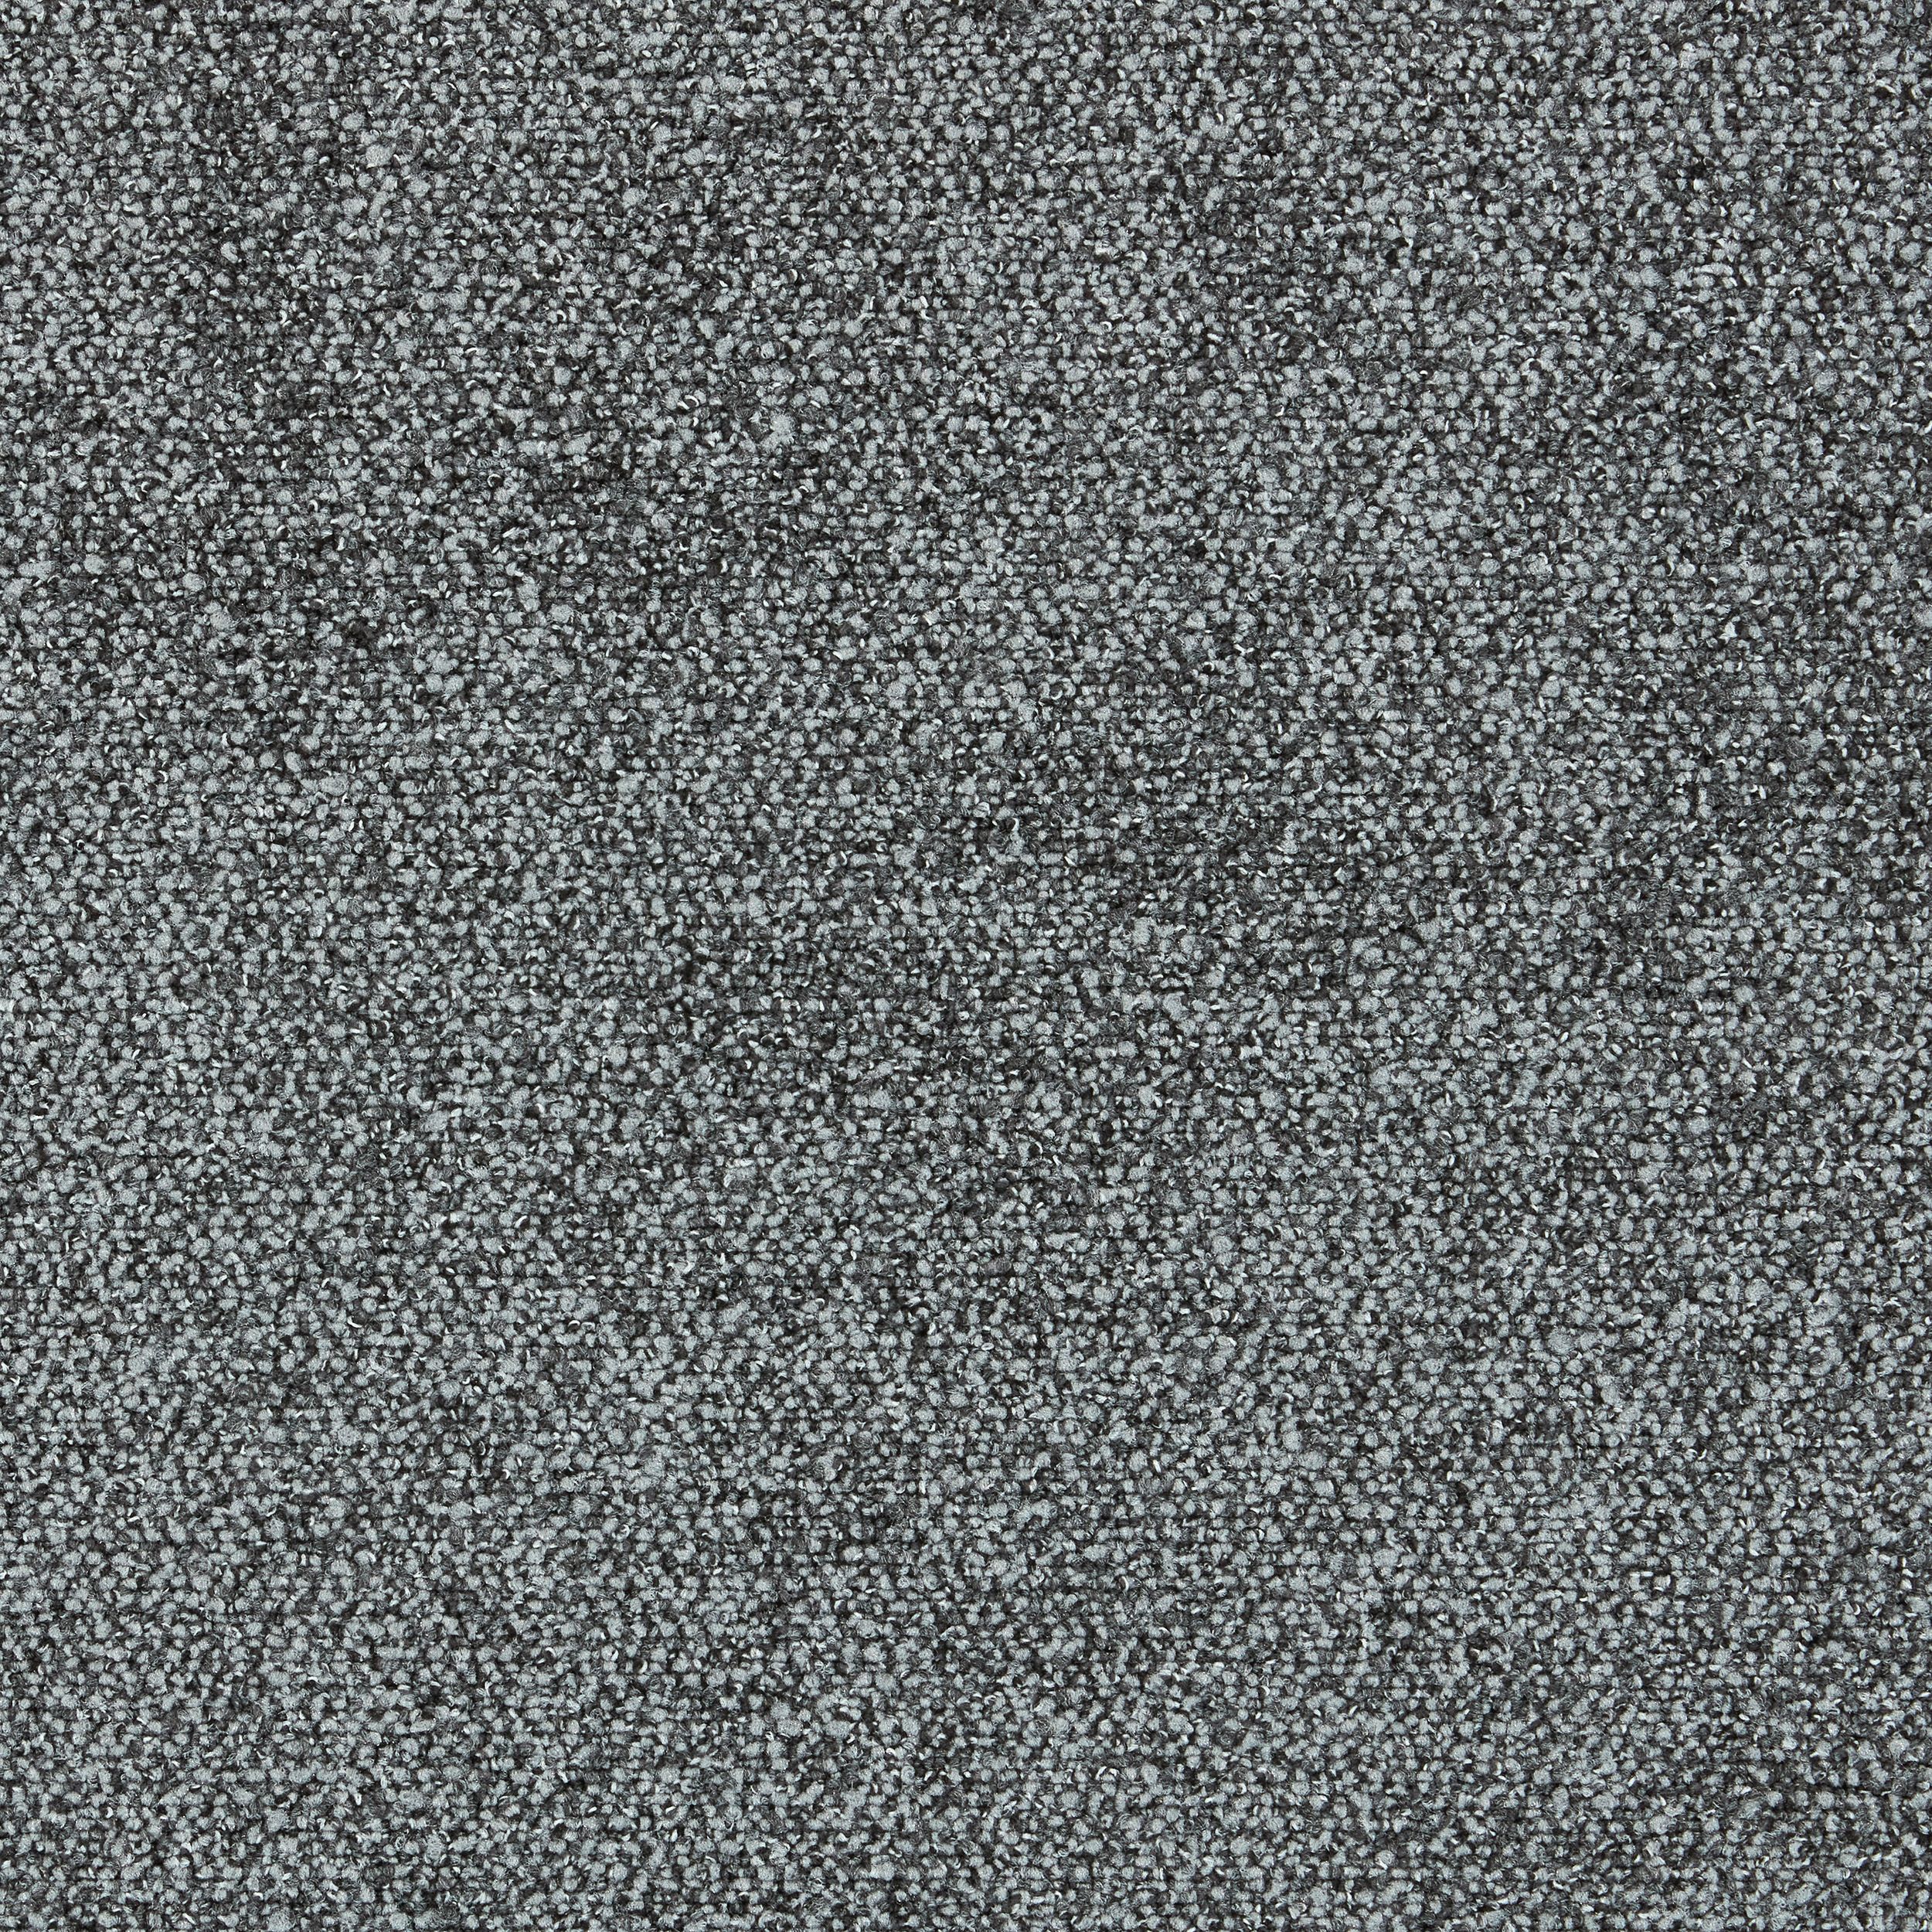 Recreation carpet tile in Concept image number 2